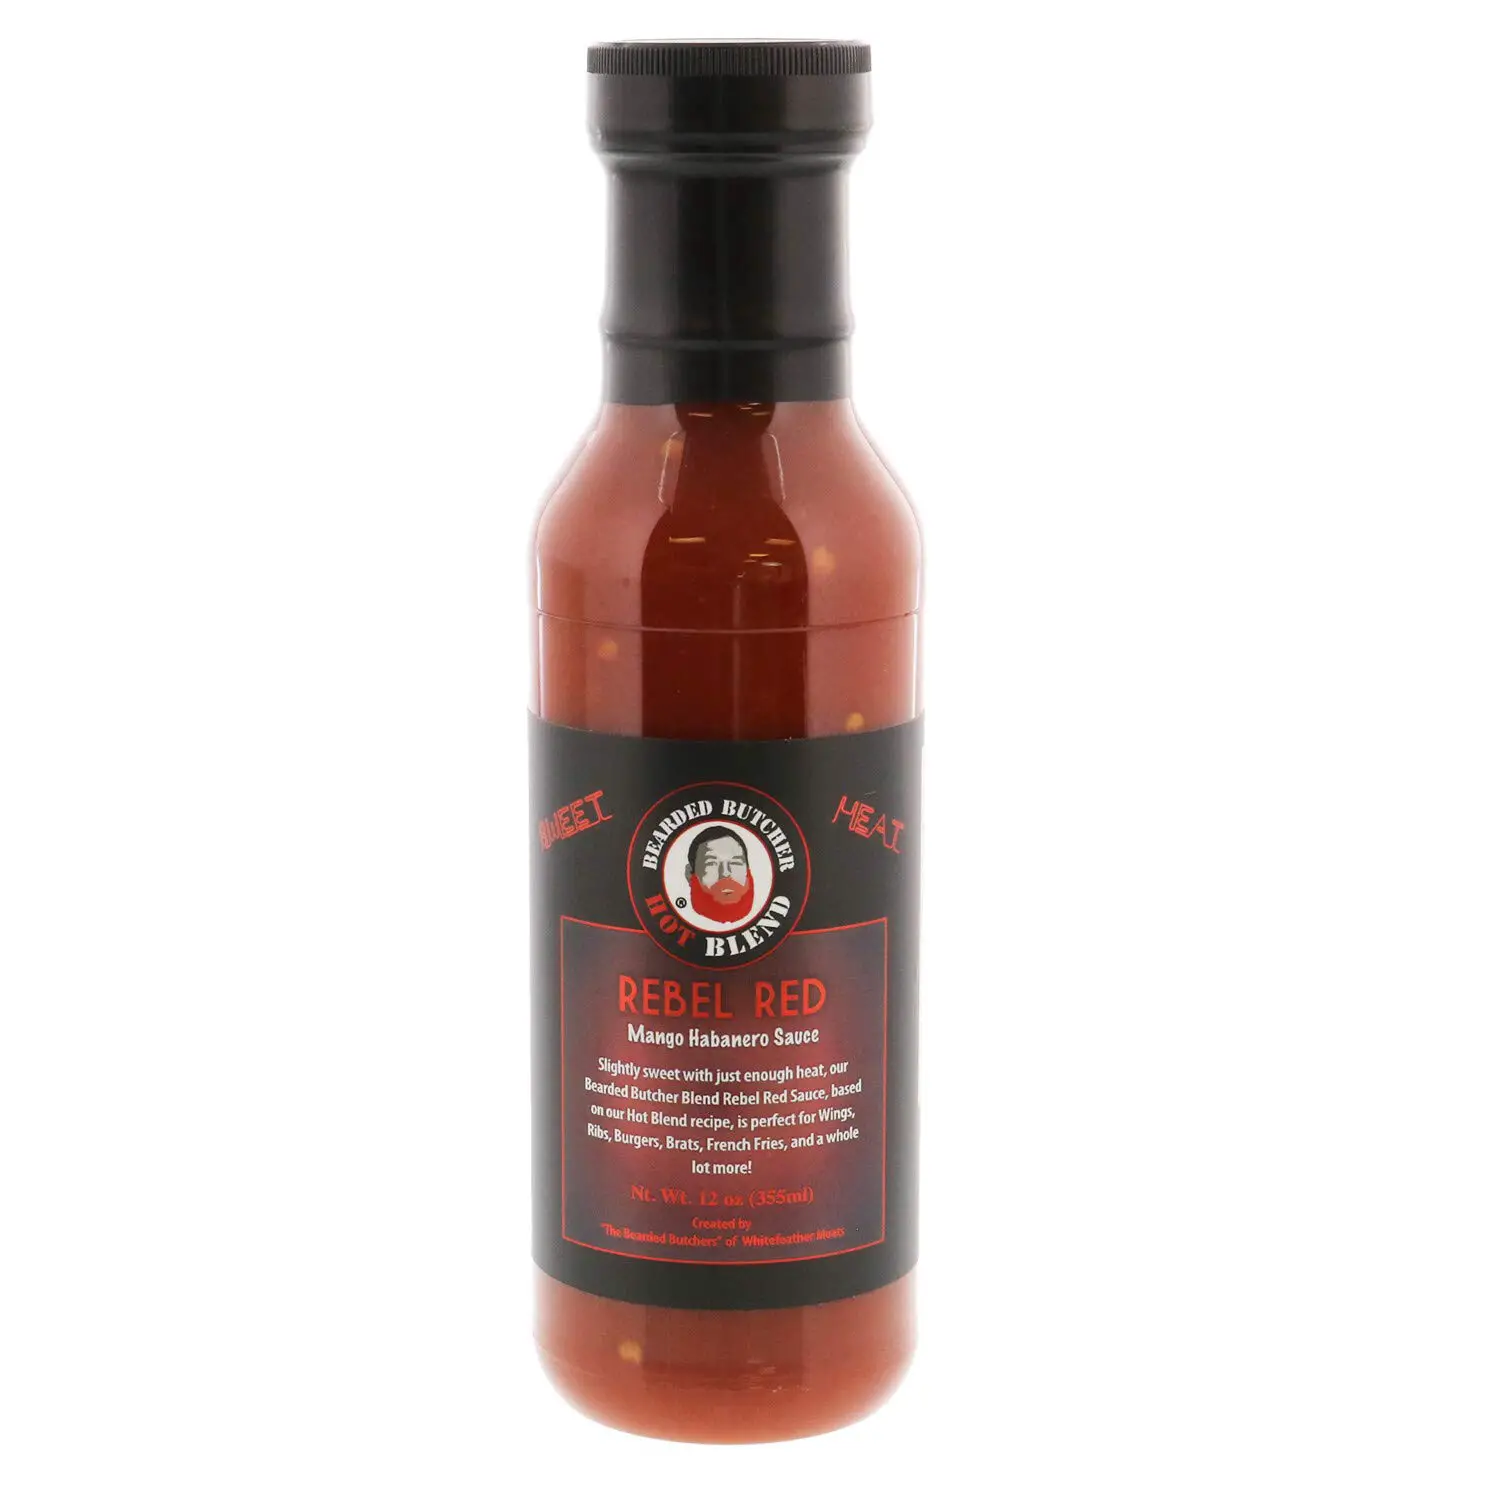 Amazon.com : Rebel Red Mango Habanero Sauce, Delicious Flavor ...